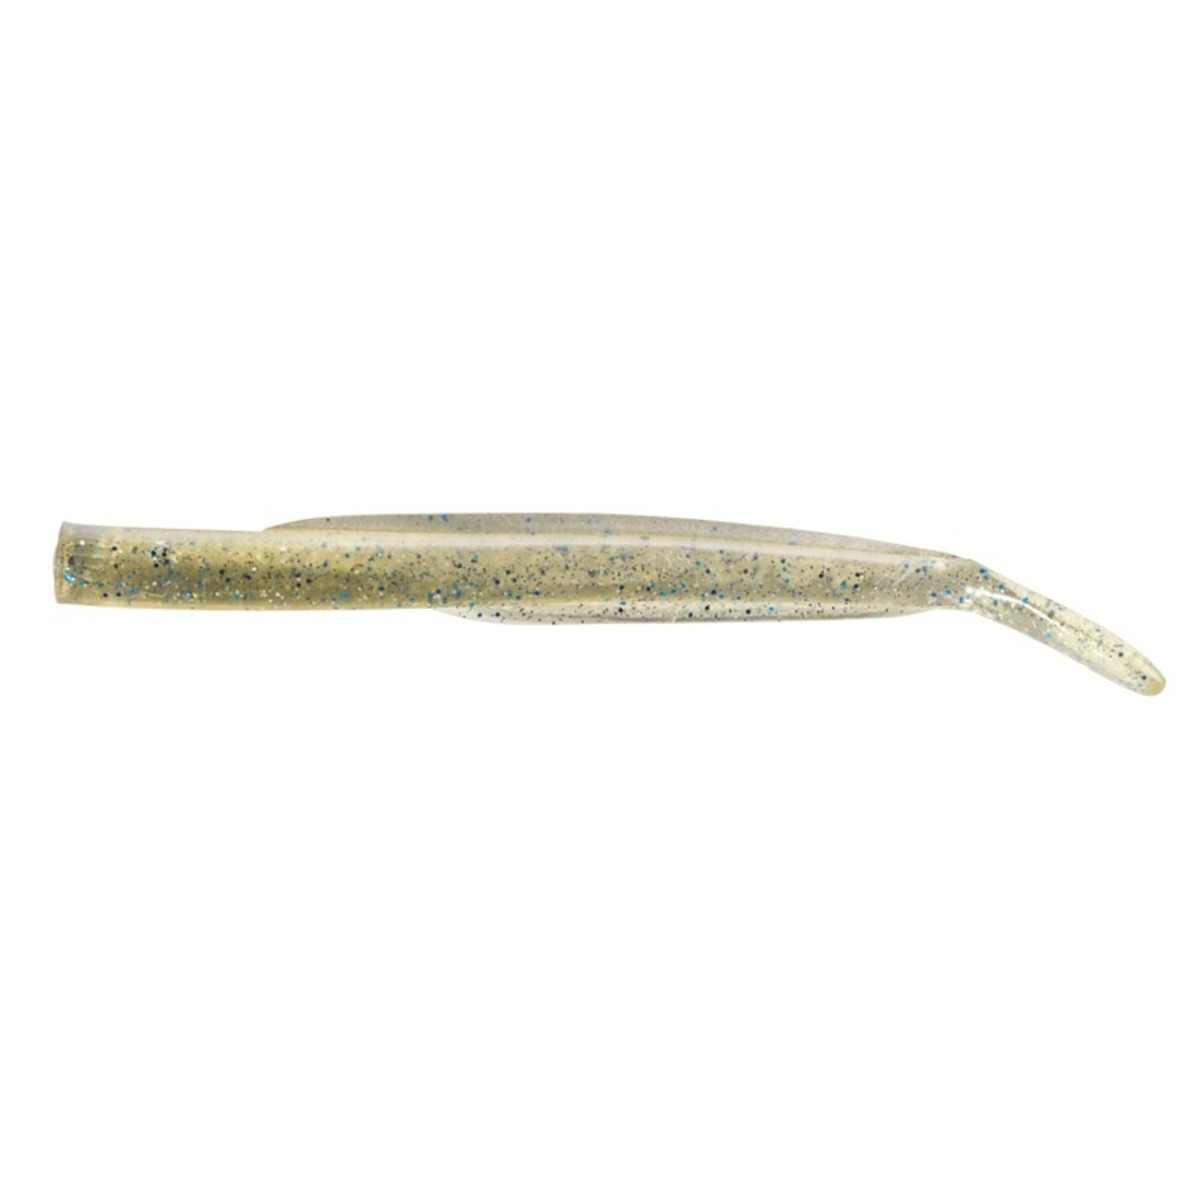 Berkley Prerigged Eels - 15 cm - 15 g (jig head) - Sparkle Pearl